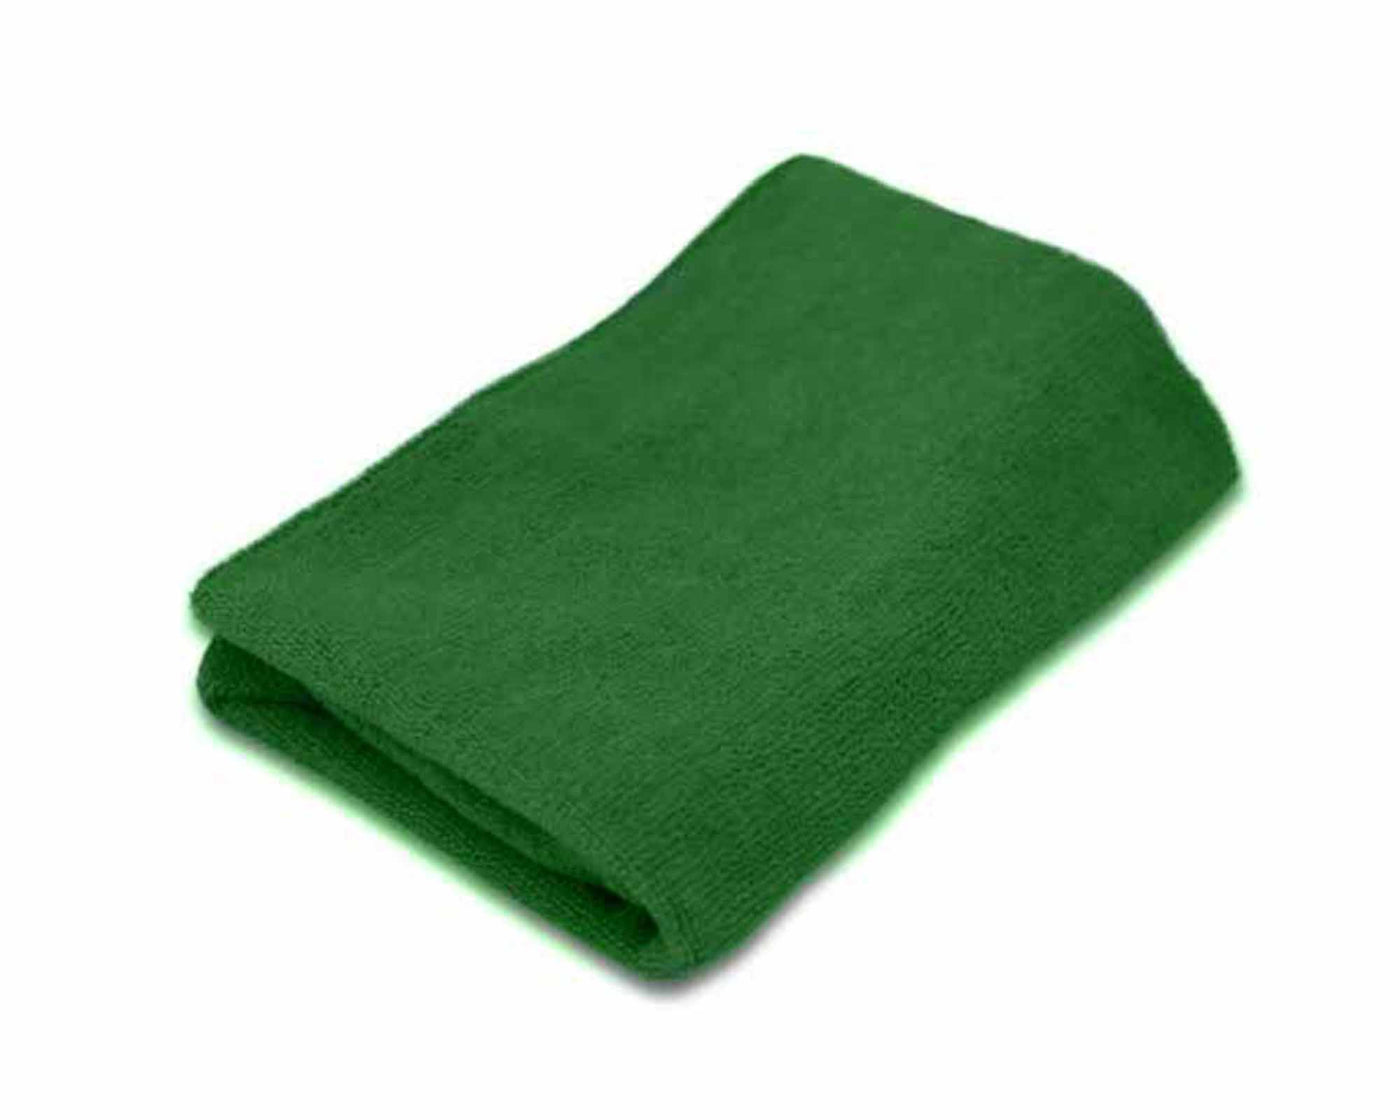 green colour premium grade microfiber towel